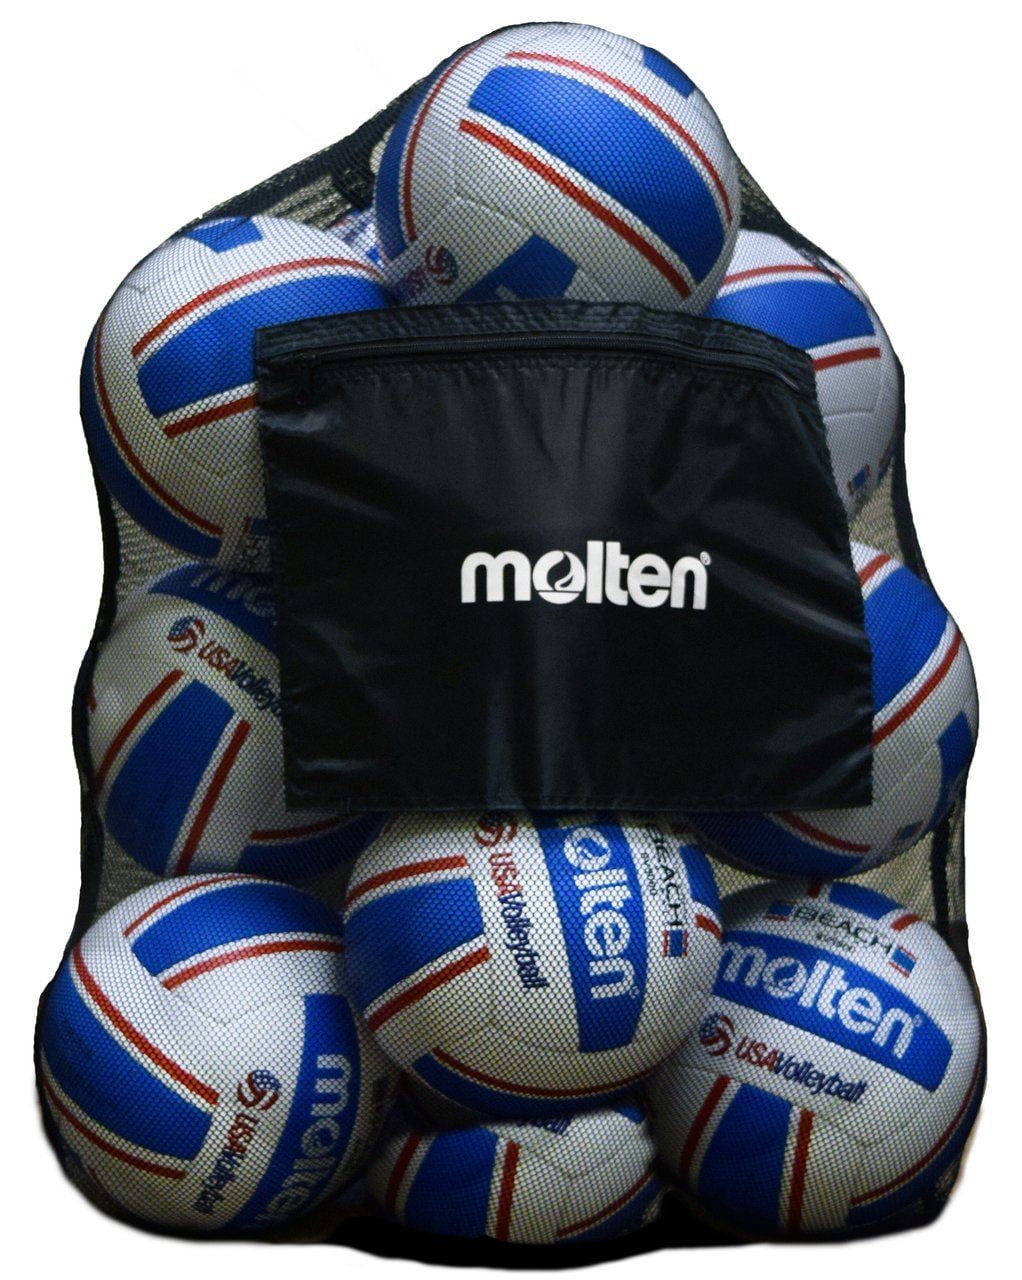 Tachikara Tv6 Volleyball Bag Navy - Walmart.com